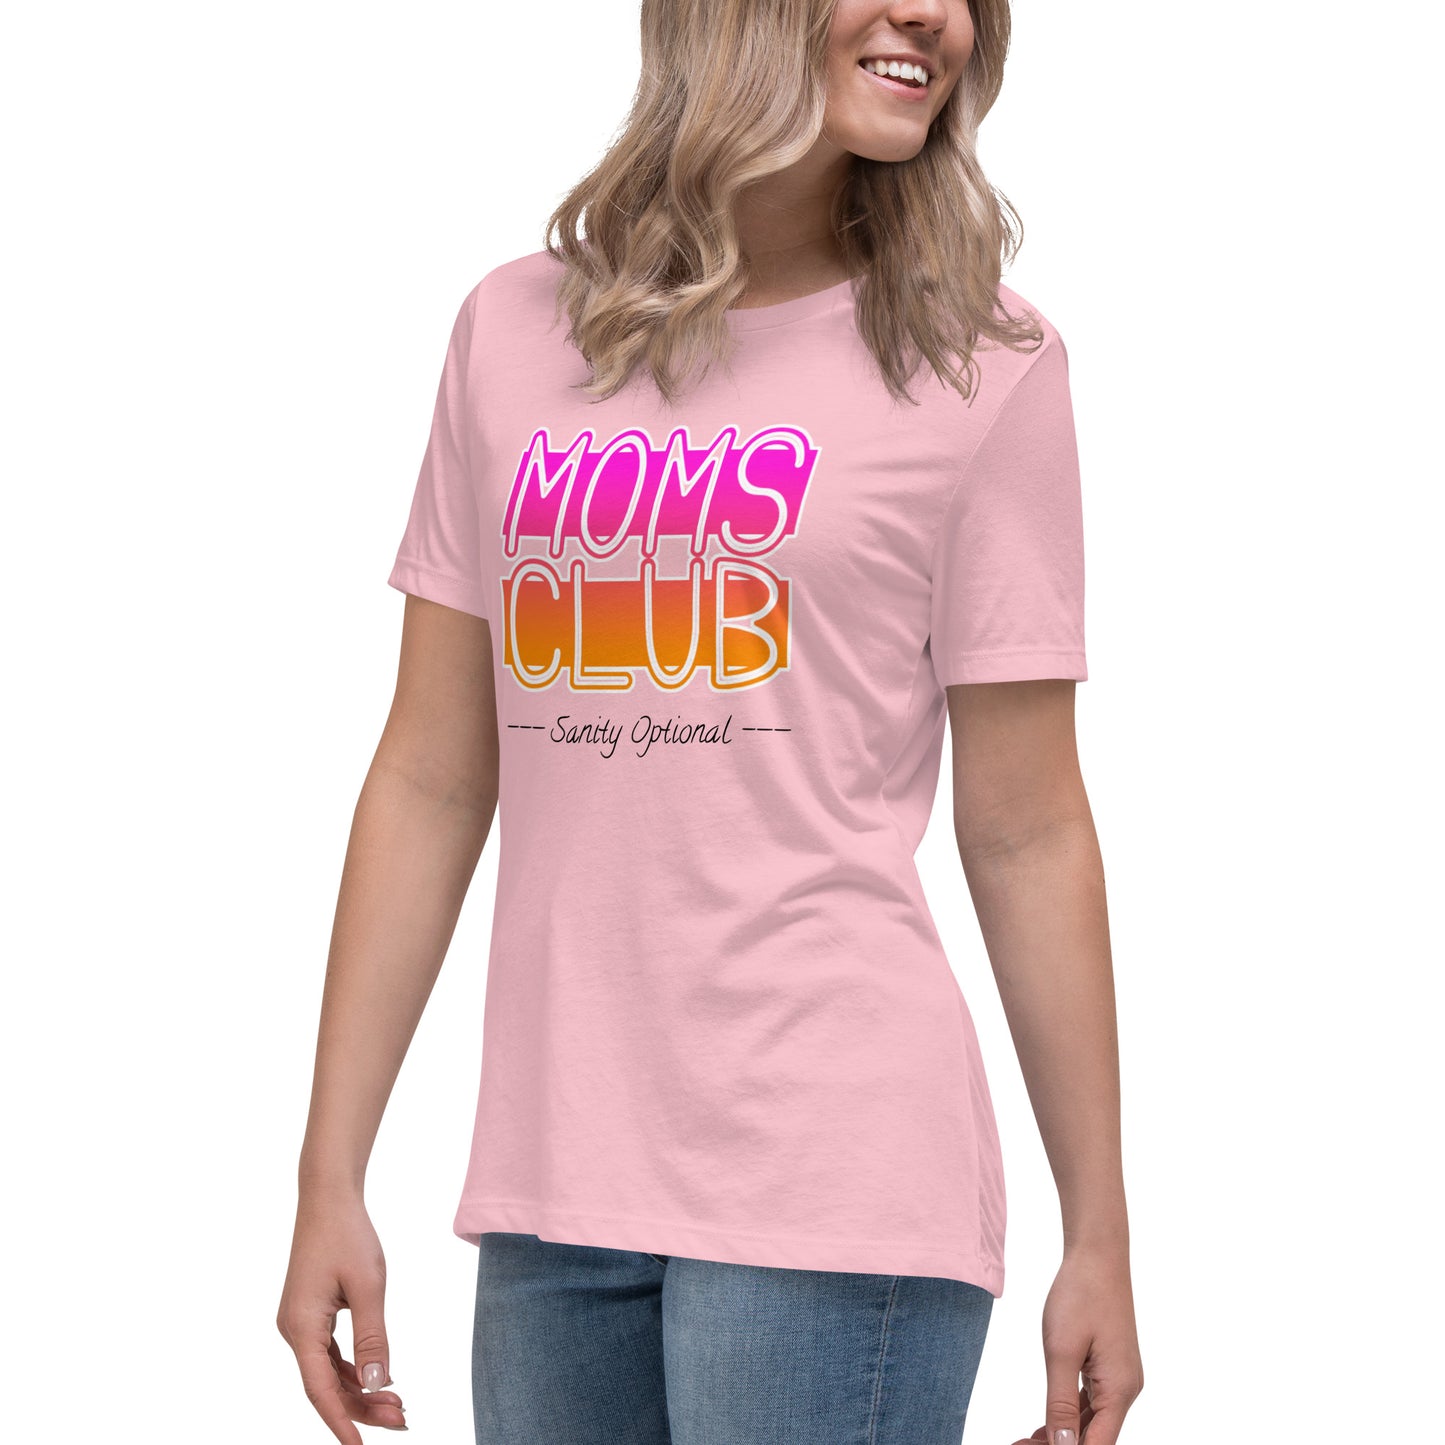 Moms Club -Sanity Optional Women's T-Shirt